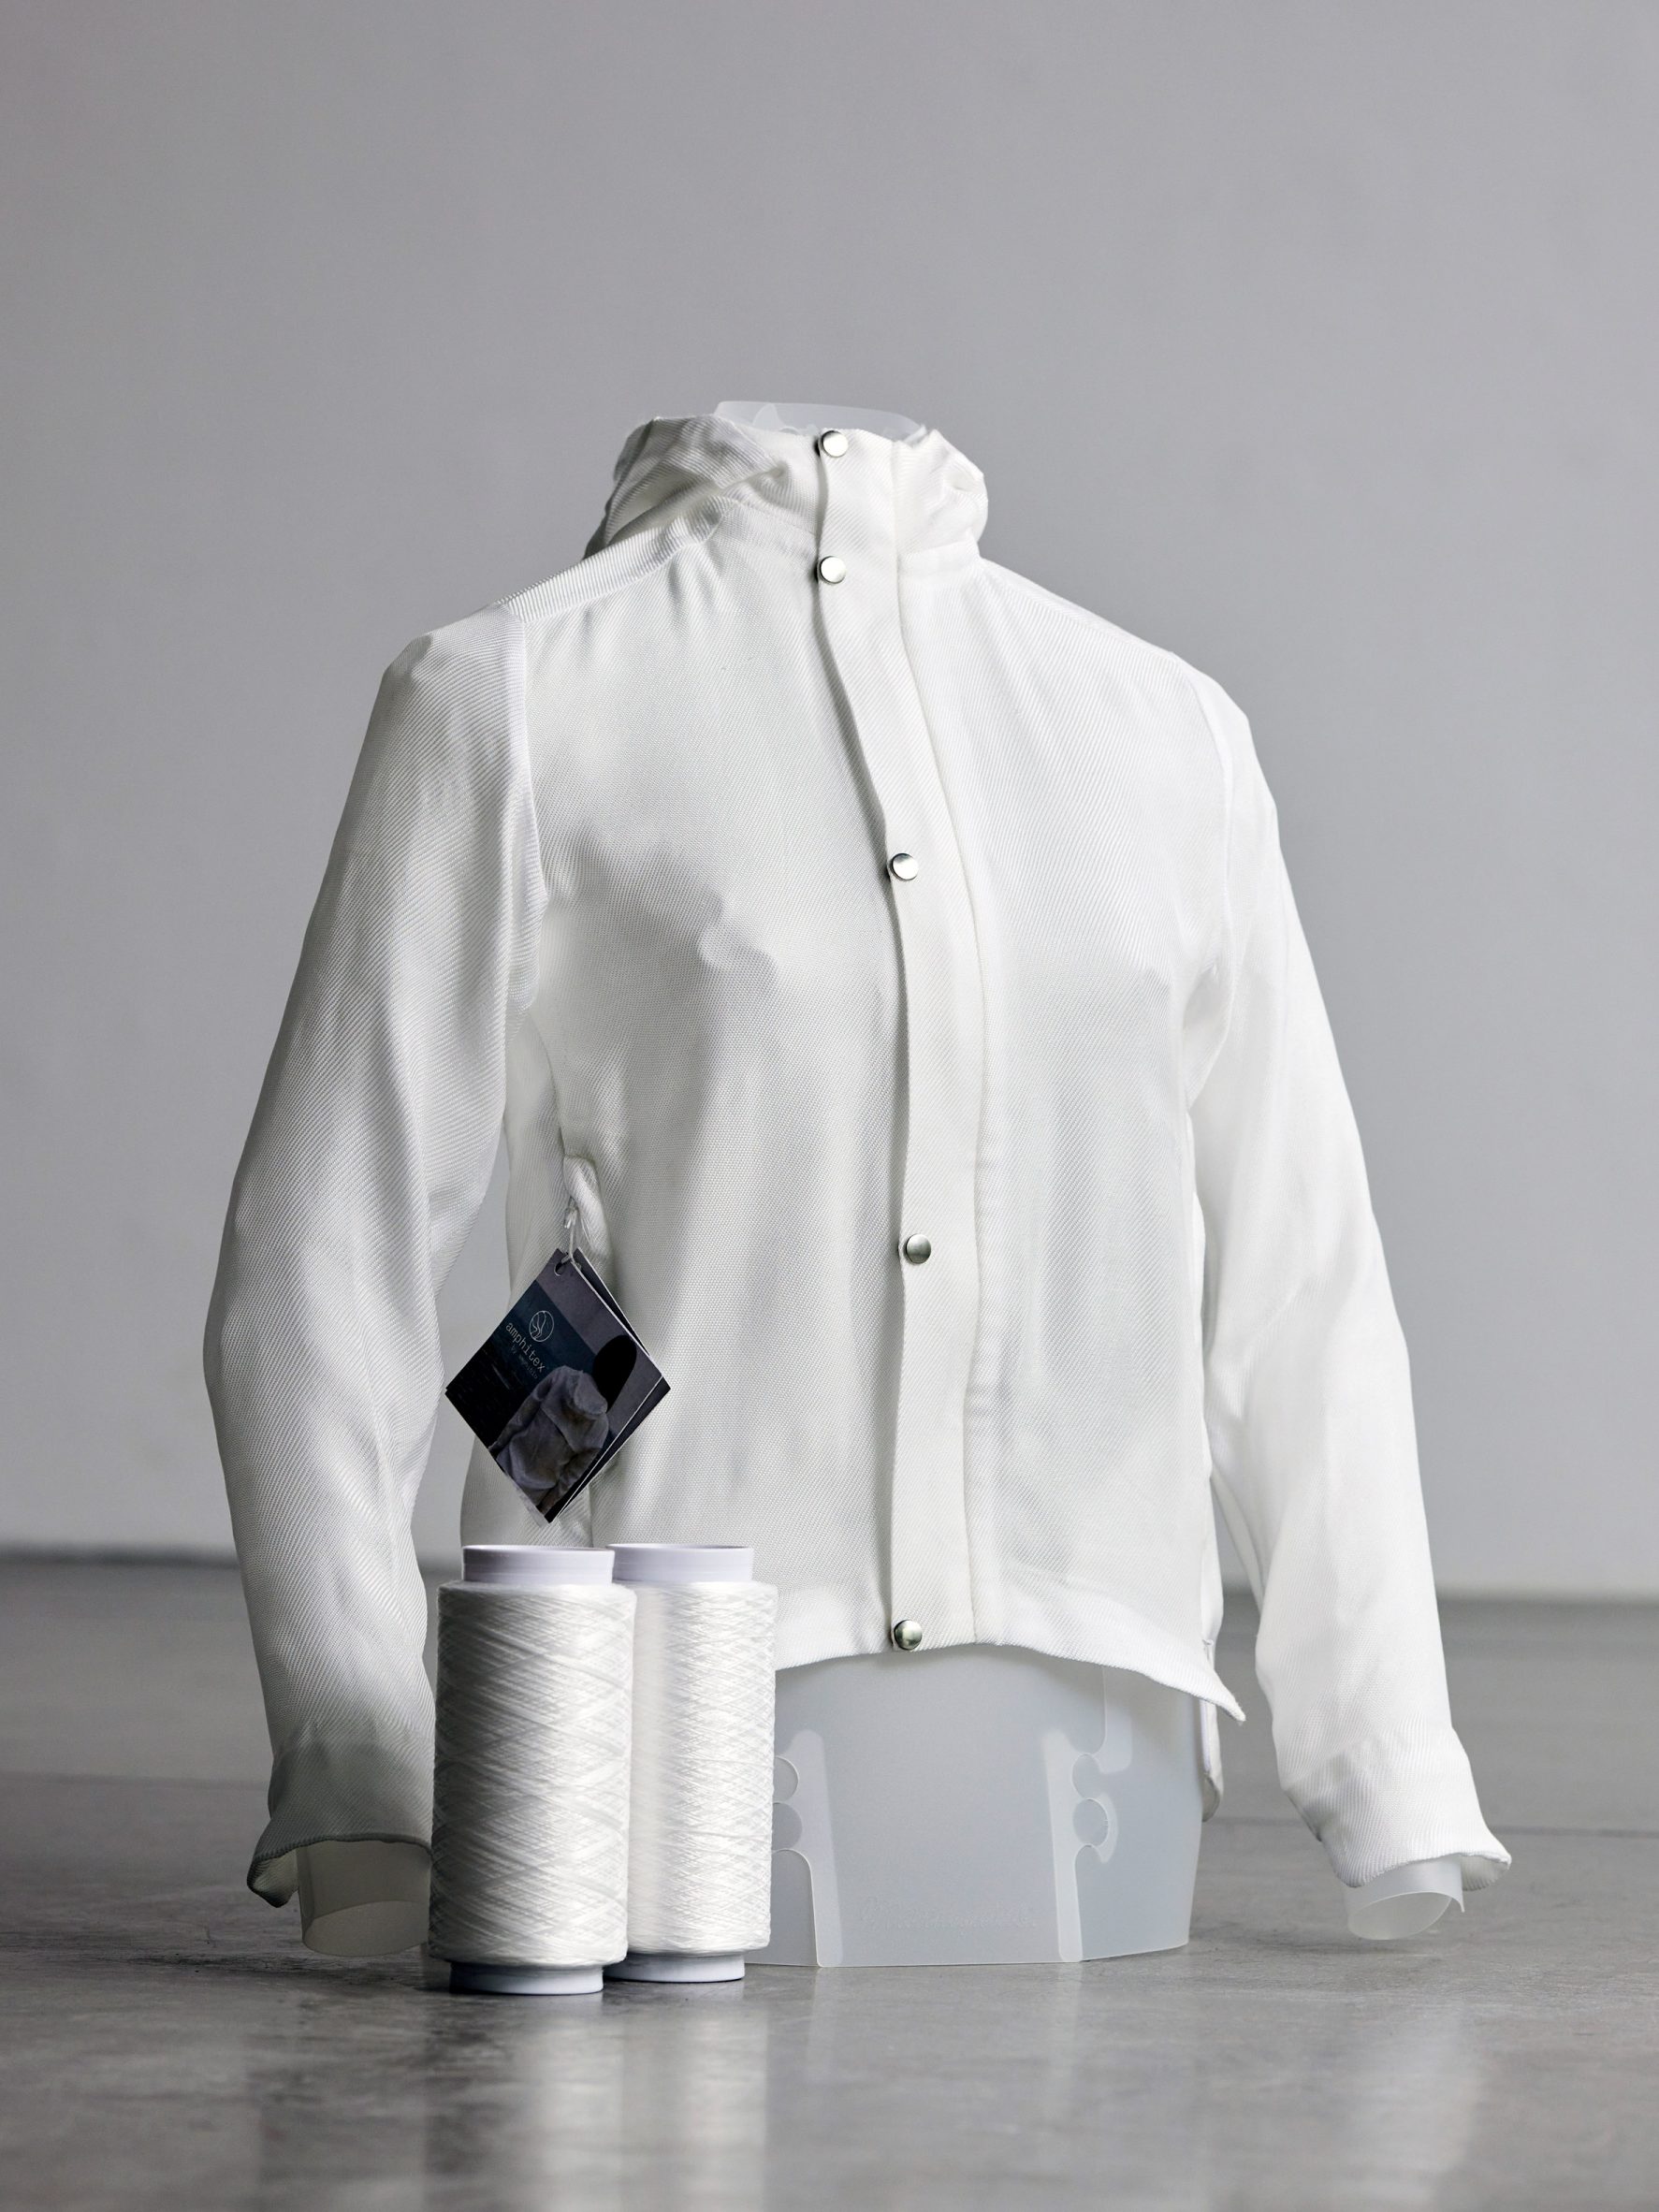 Amphitex raincoat by Amphibio from Terra Carta Design Lab